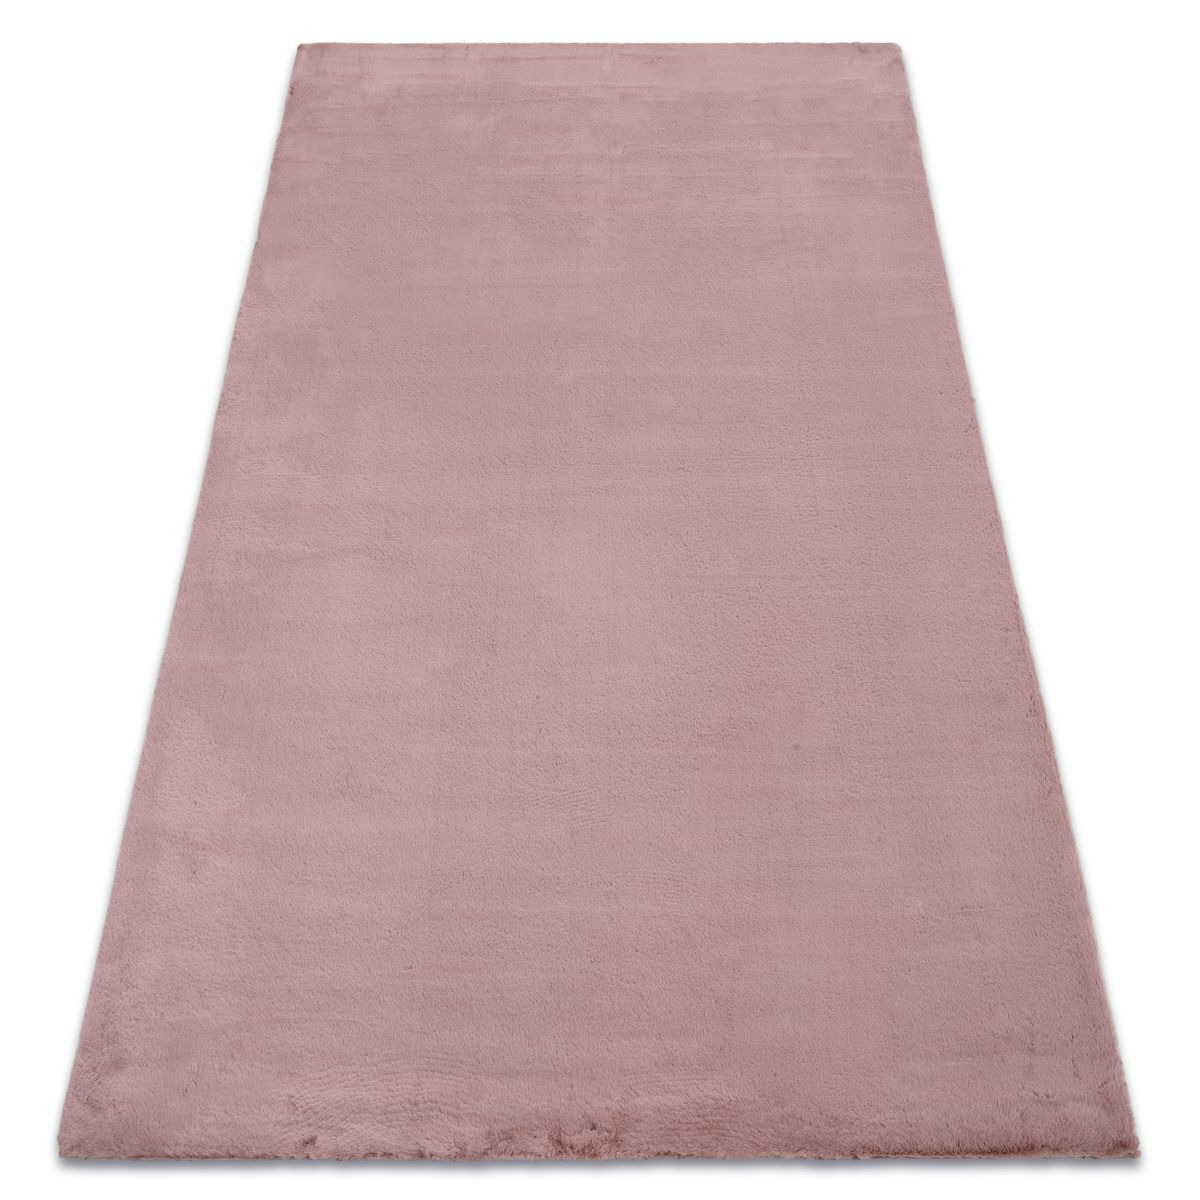 Taol Single Coloured Rug Pink, 200x290 cm - image 1